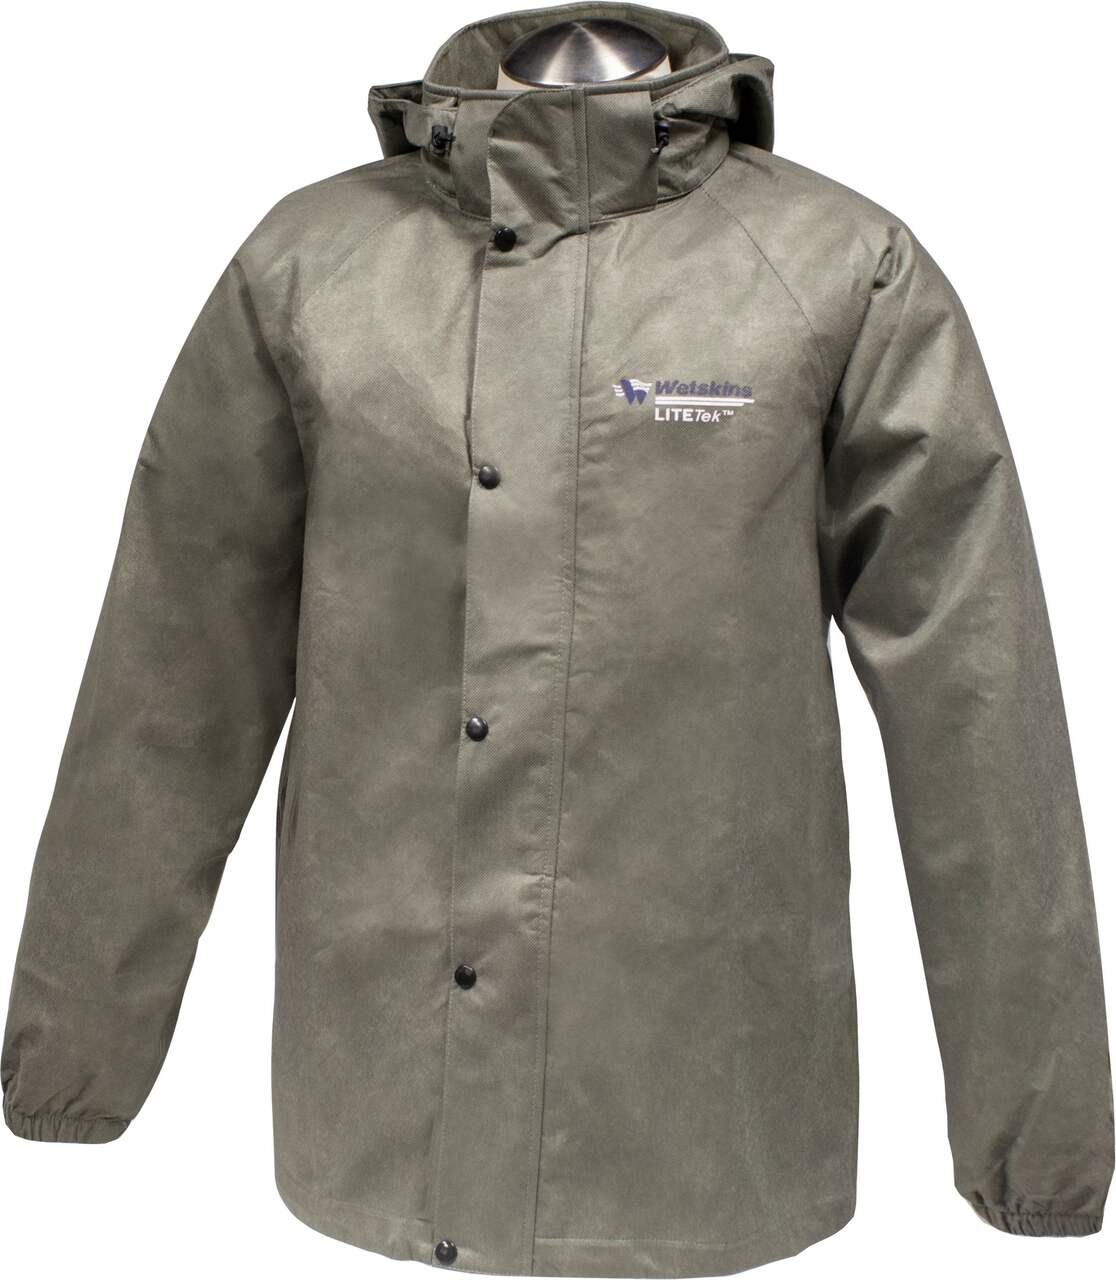 Wetskins Men's Ultralight Waterproof Rainsuit Incl. Jacket and Pants, Beige/ Black